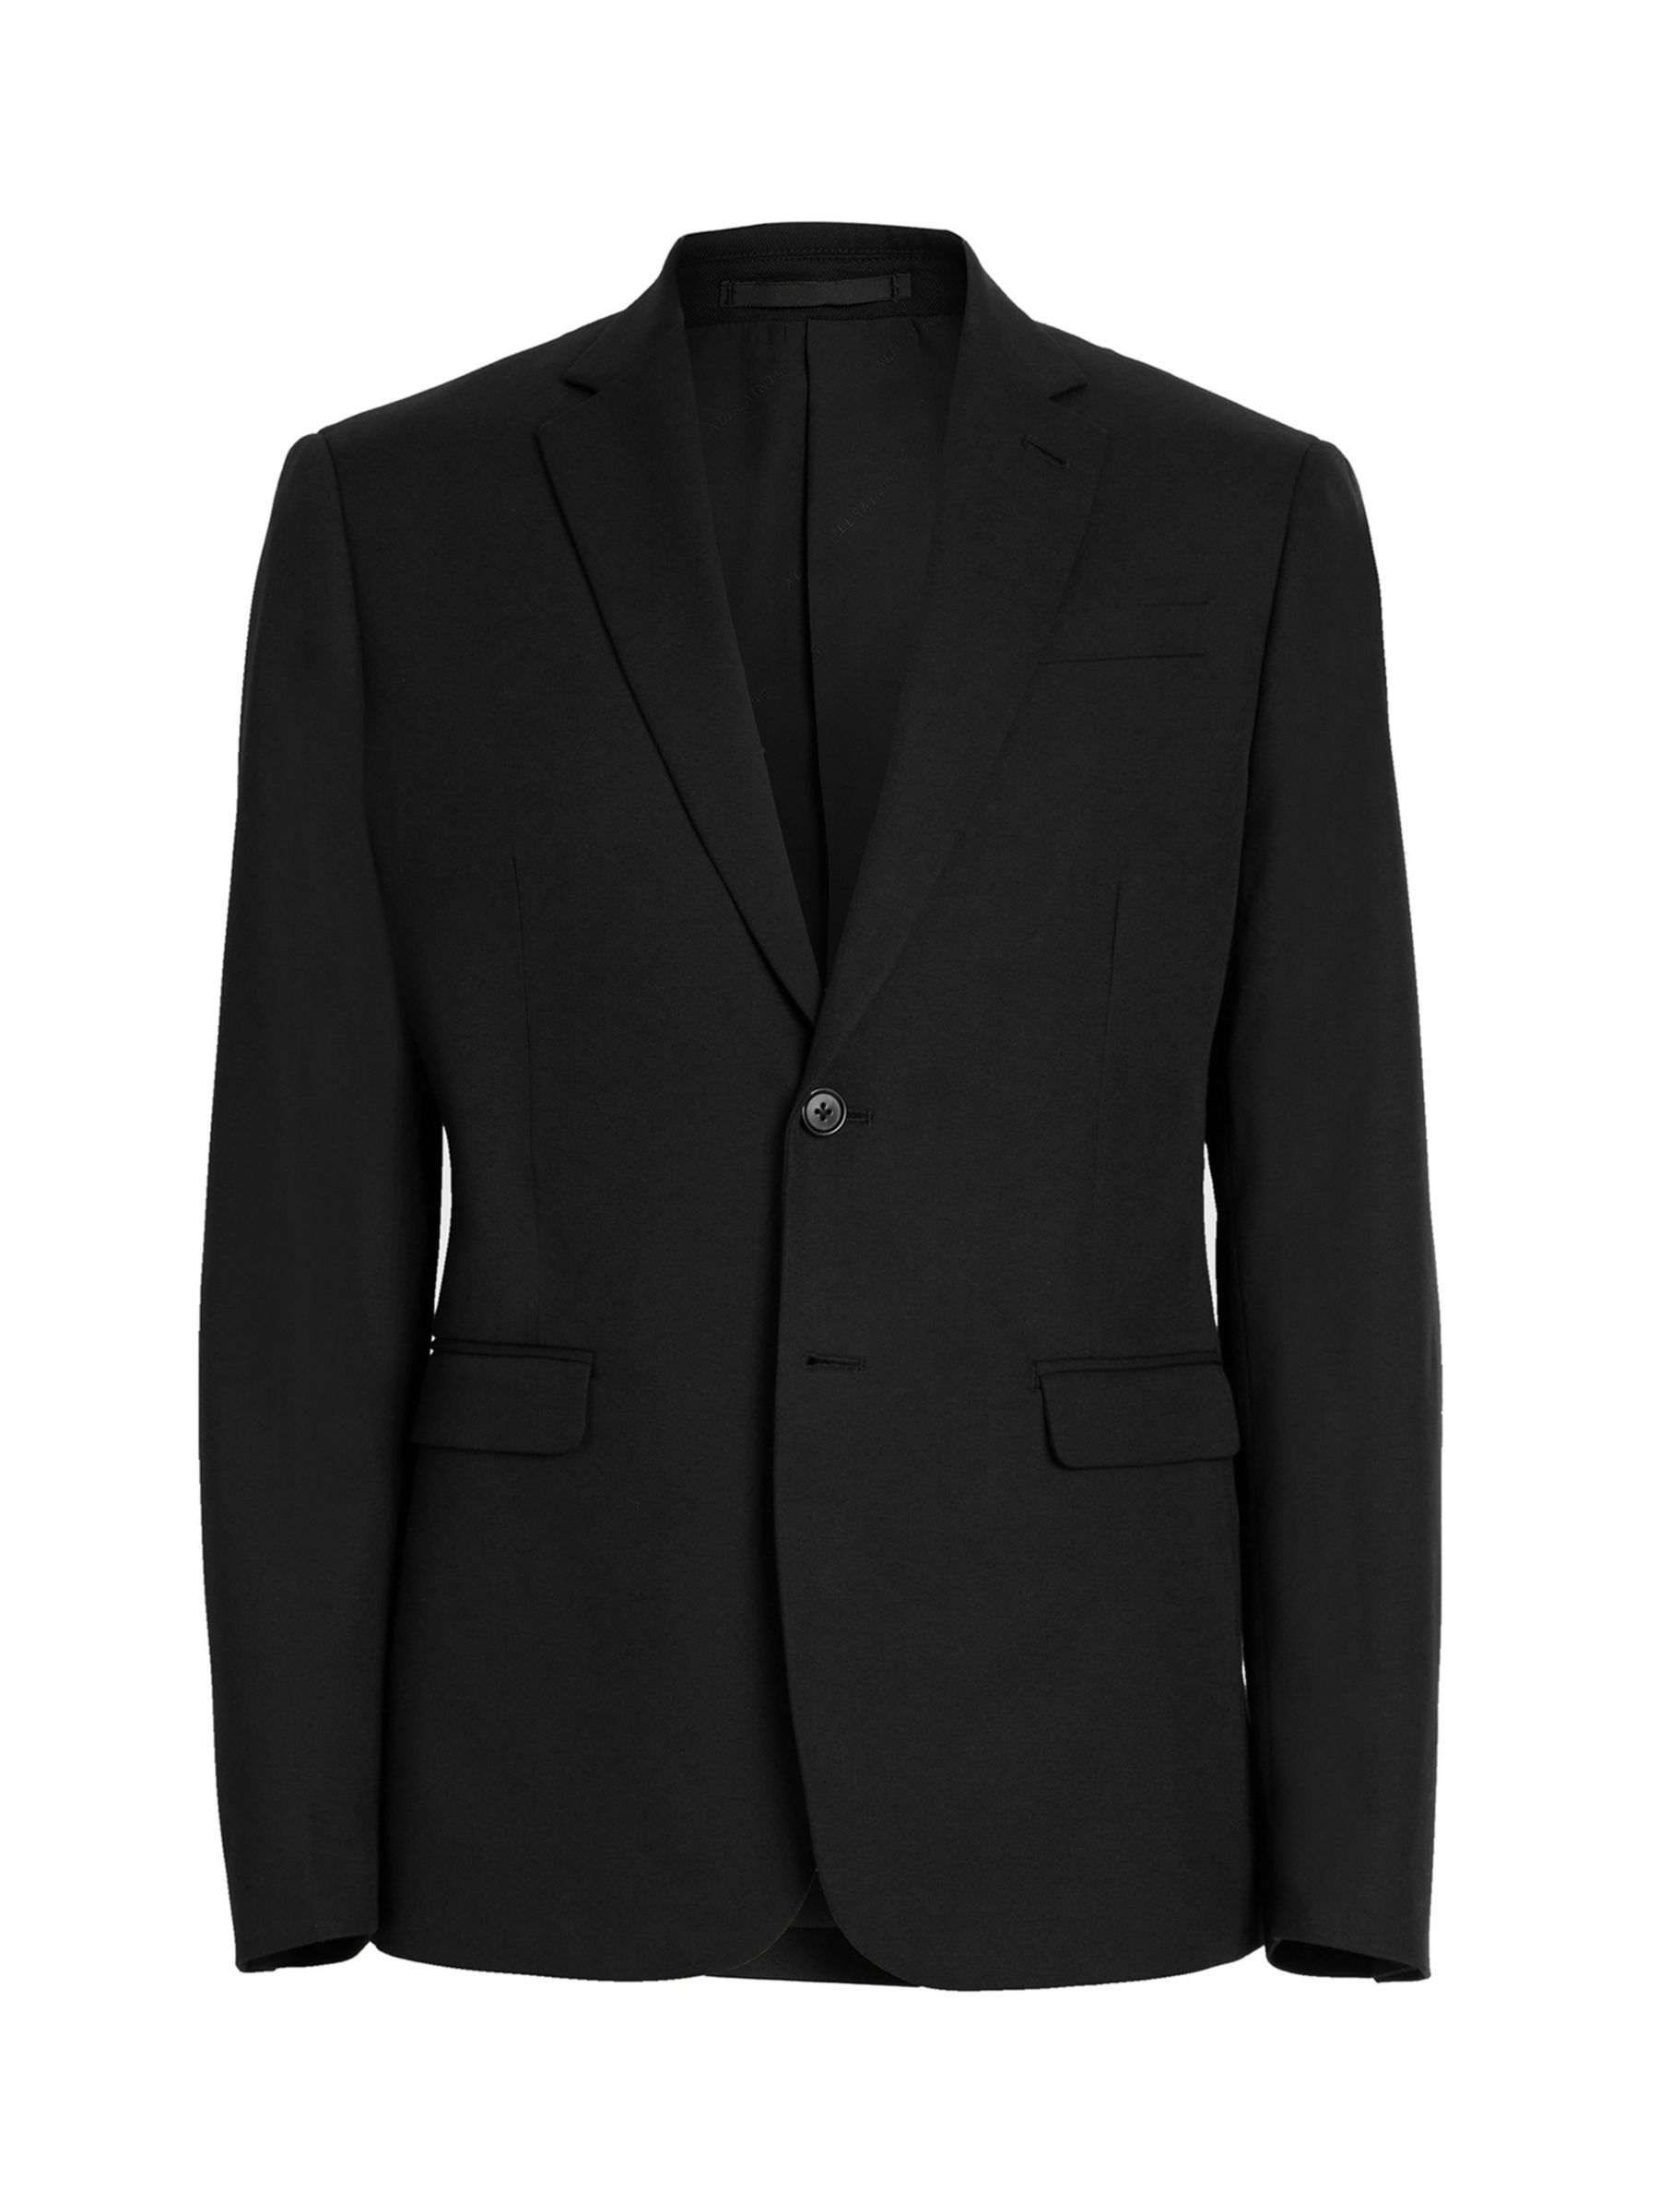 AllSaints Tallis Cotton/Wool Blend Blazer, Black at John Lewis & Partners